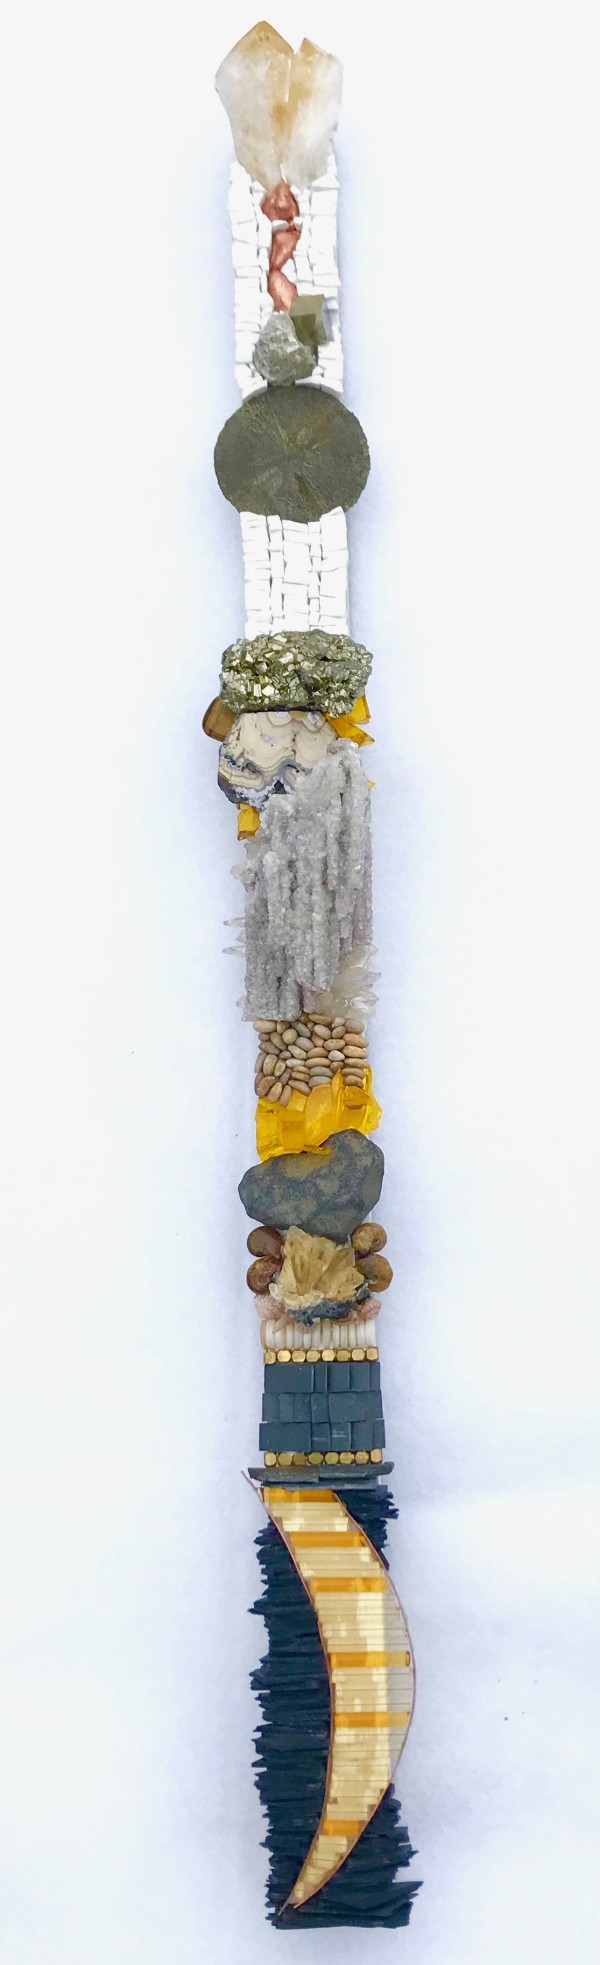 Joy Stick, "Refuge" by Donna Hoyack